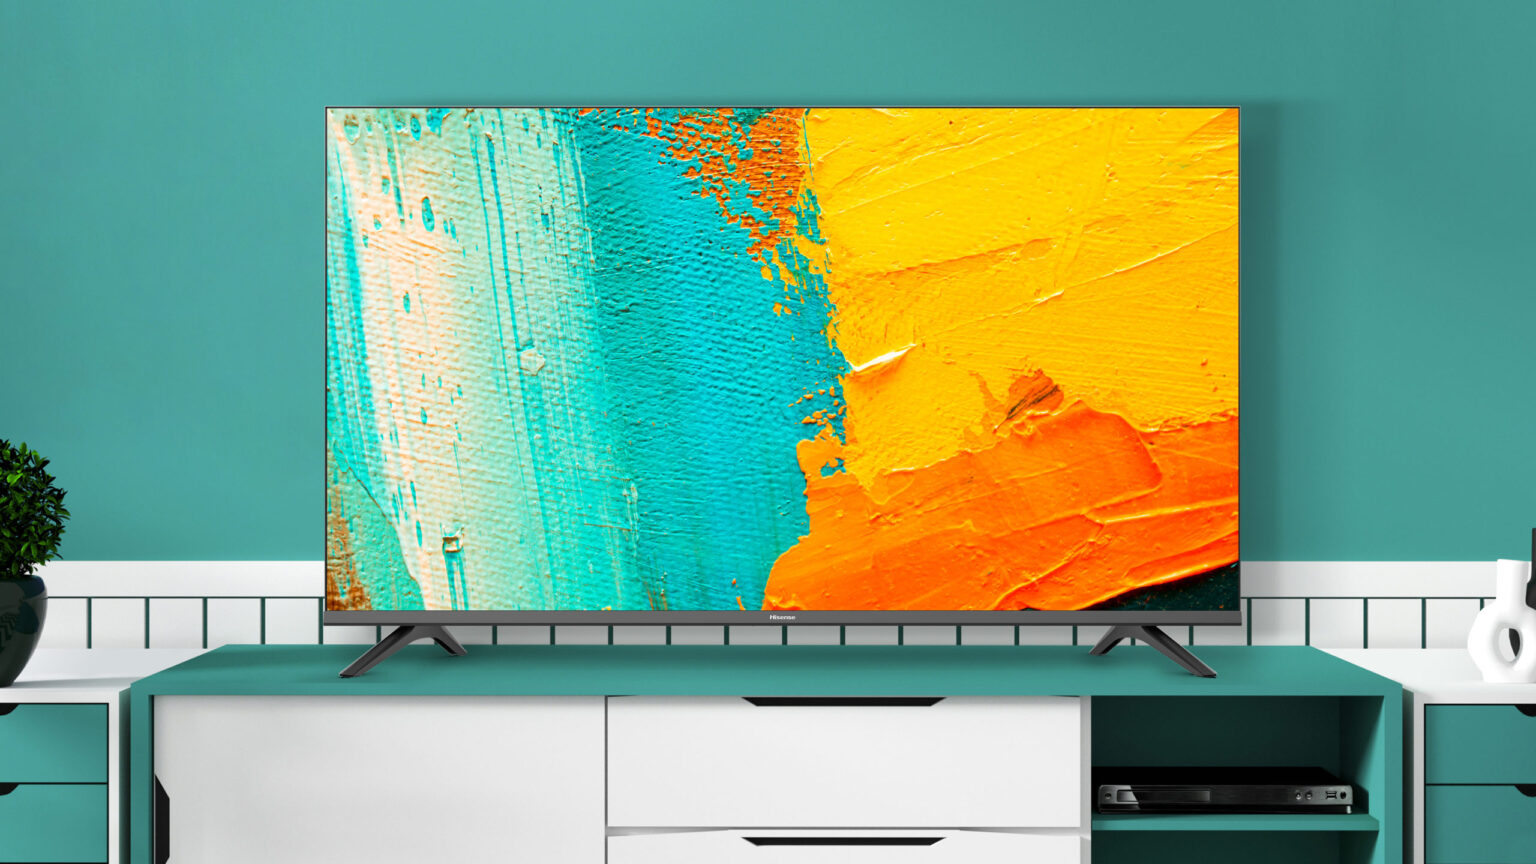 Hisense 65 Inch Ultra HD 4K LED Smart TV 2020